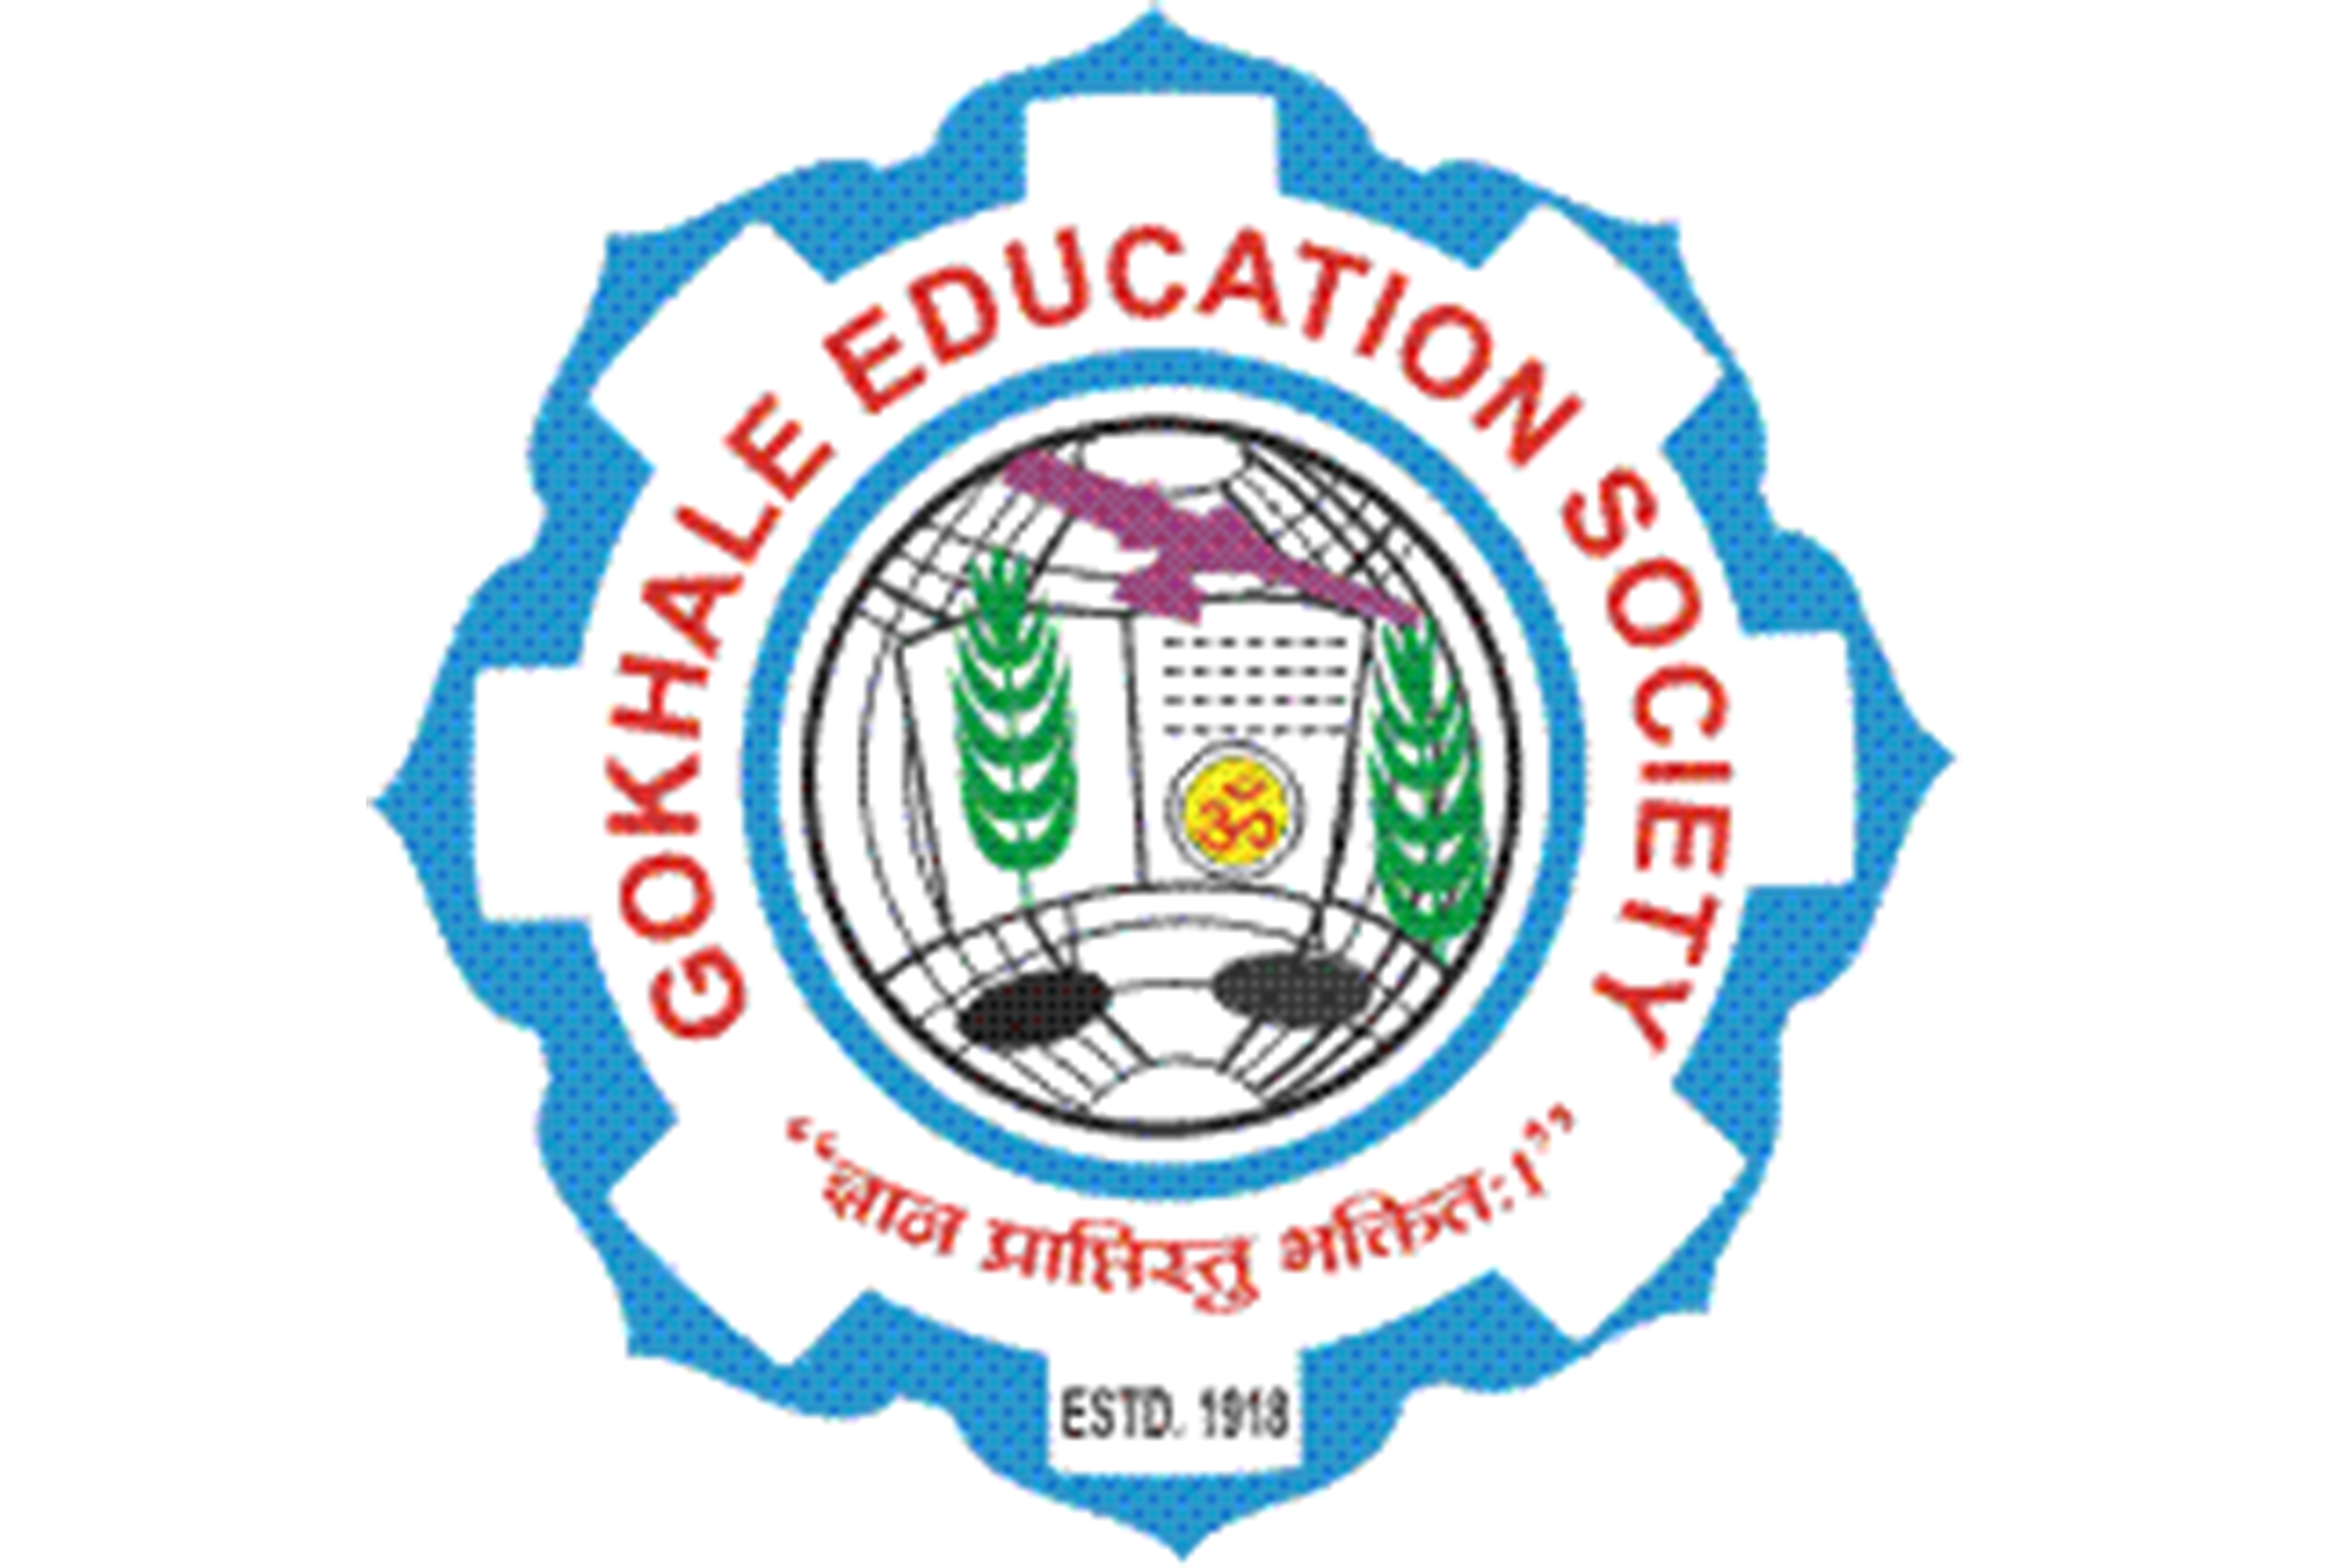 Jagruti construction (Gokhale Education)